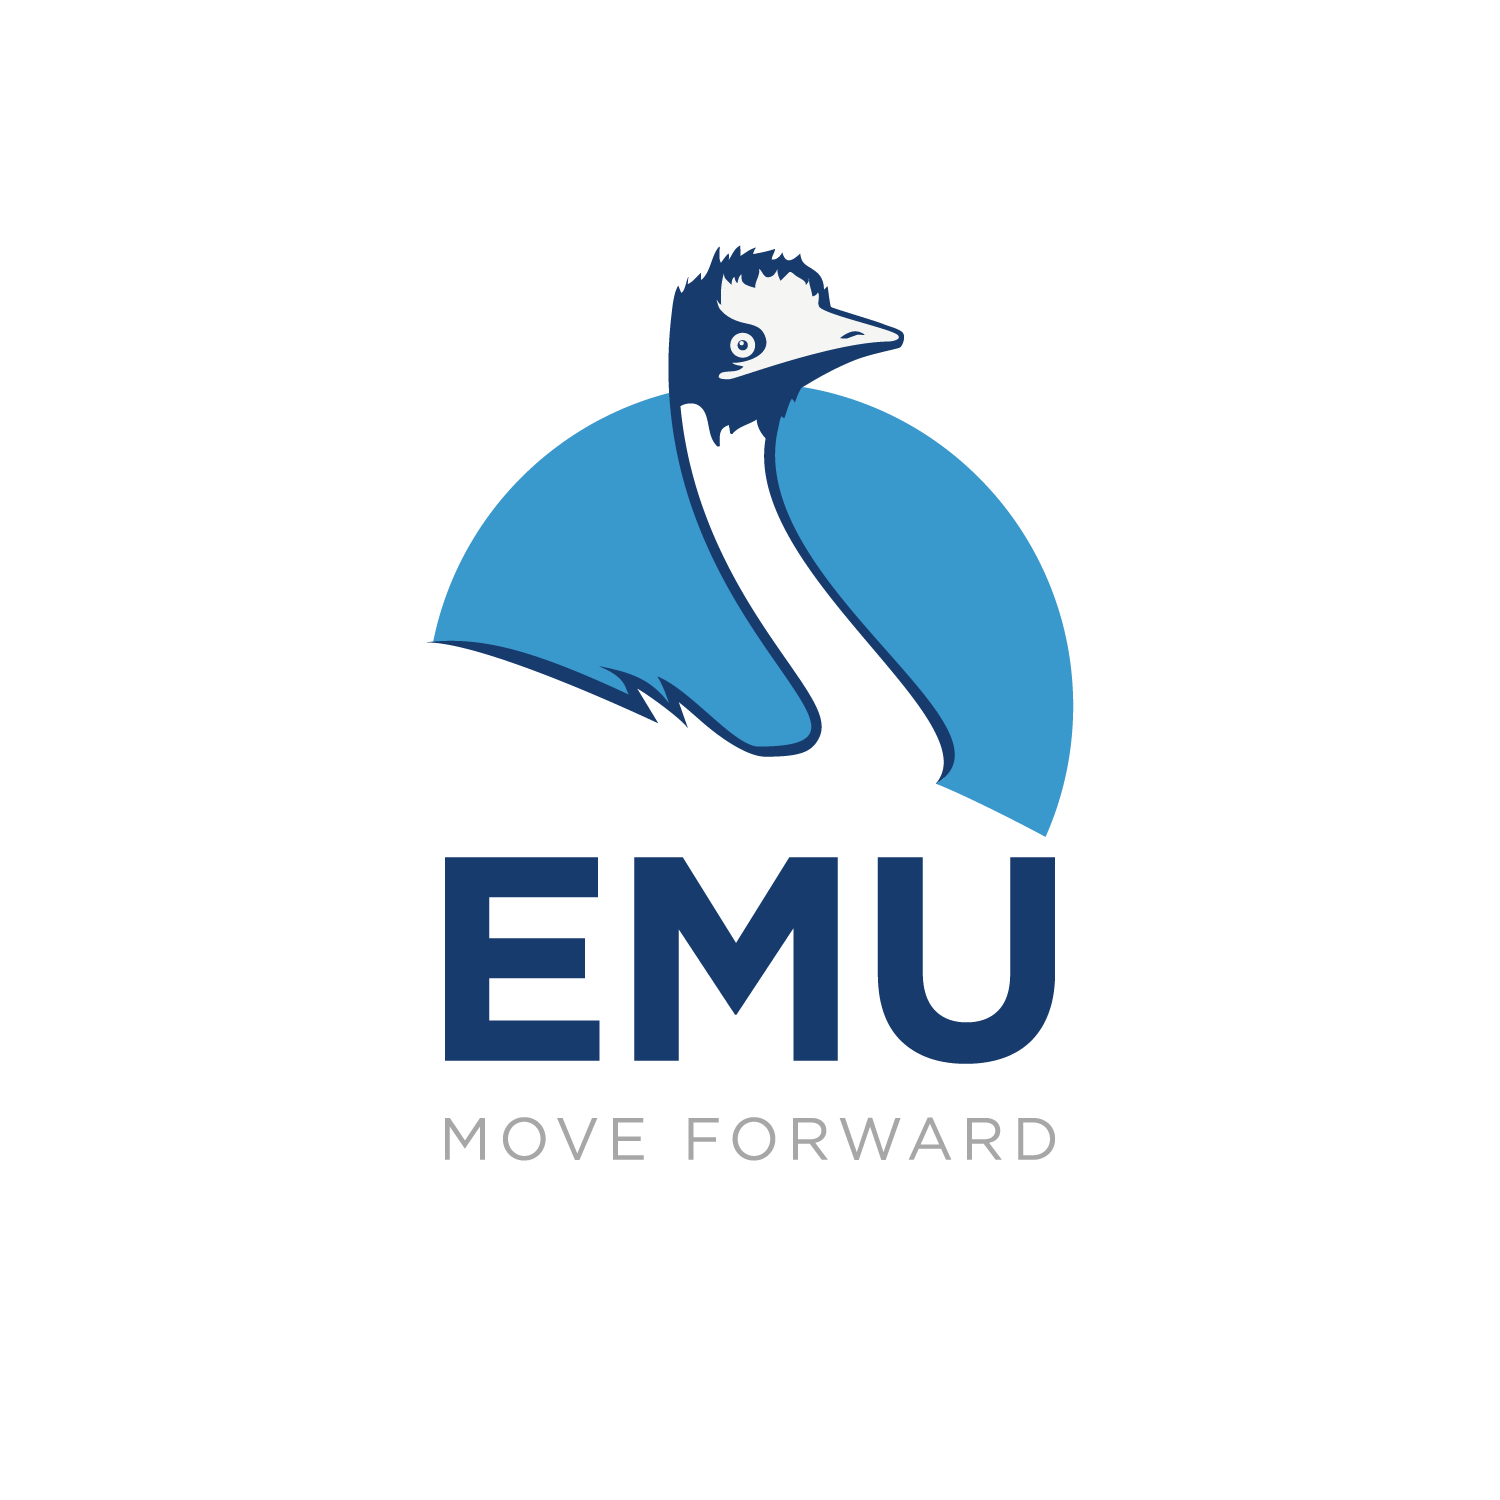 Emu Logo - Business Logo Design for EMU by phr43. Design